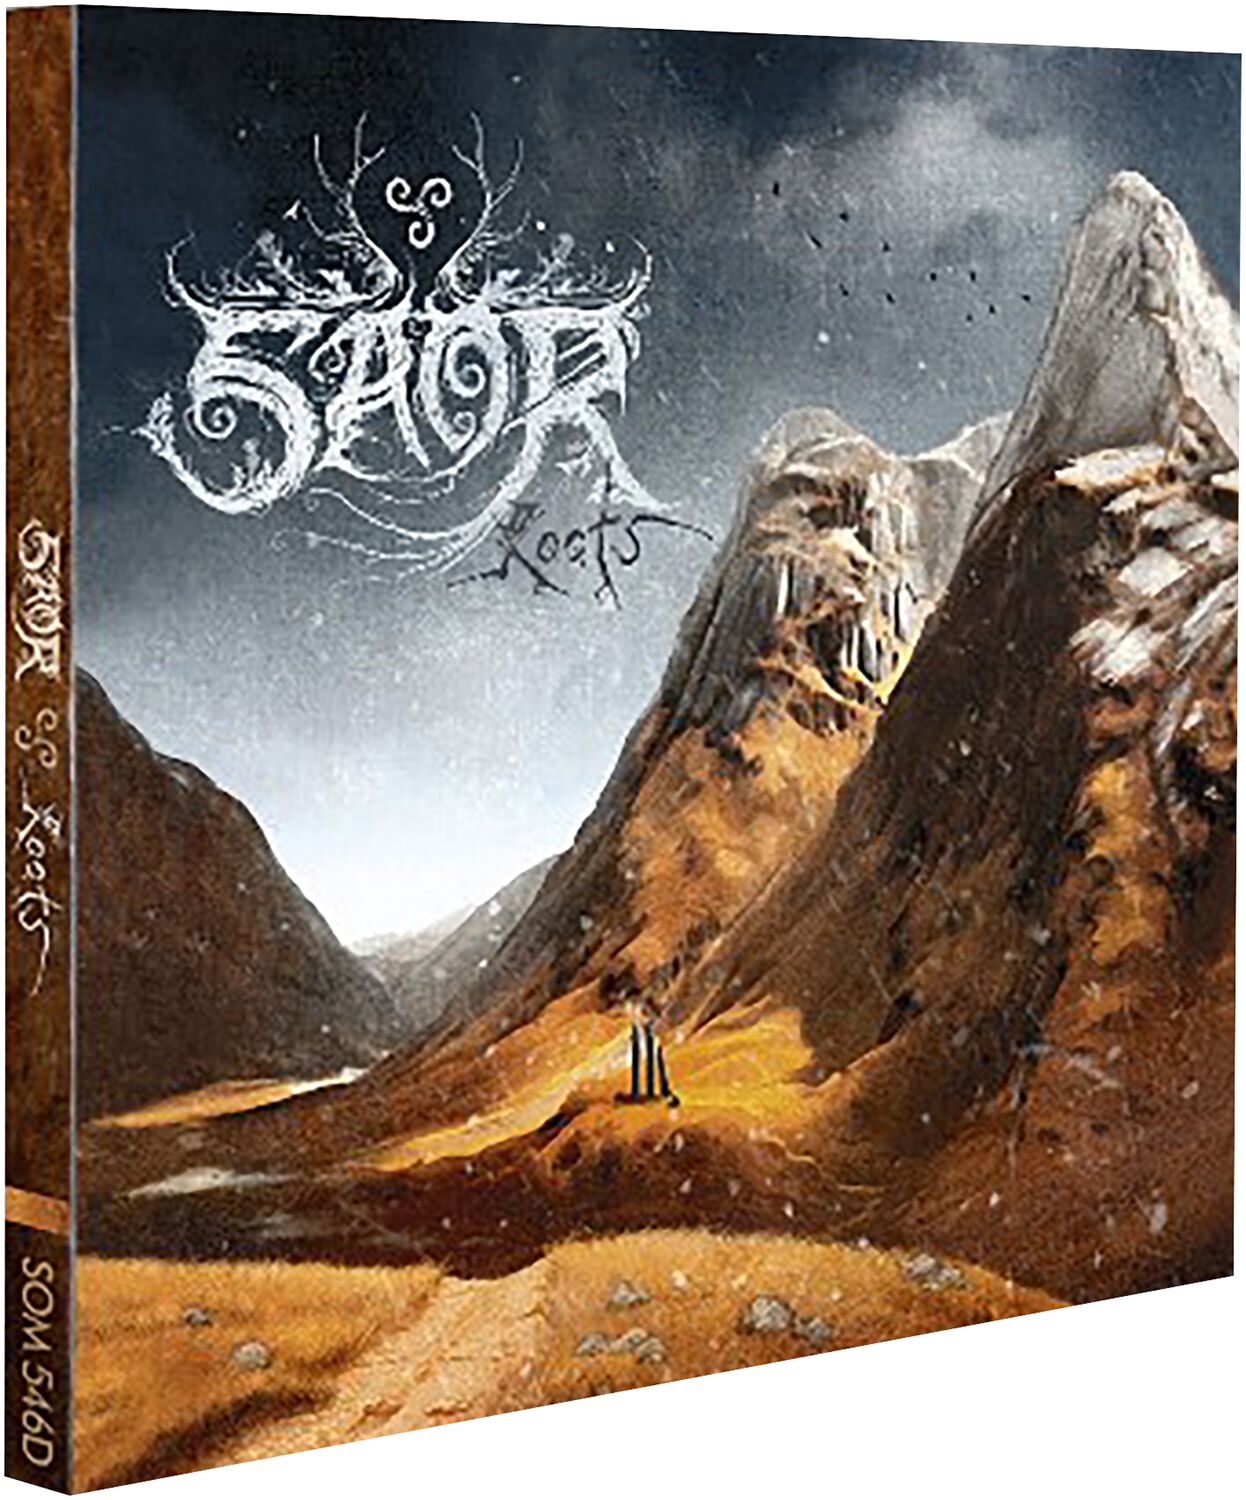 Roots von Saor - EP-CD (Digipak, Re-Release)